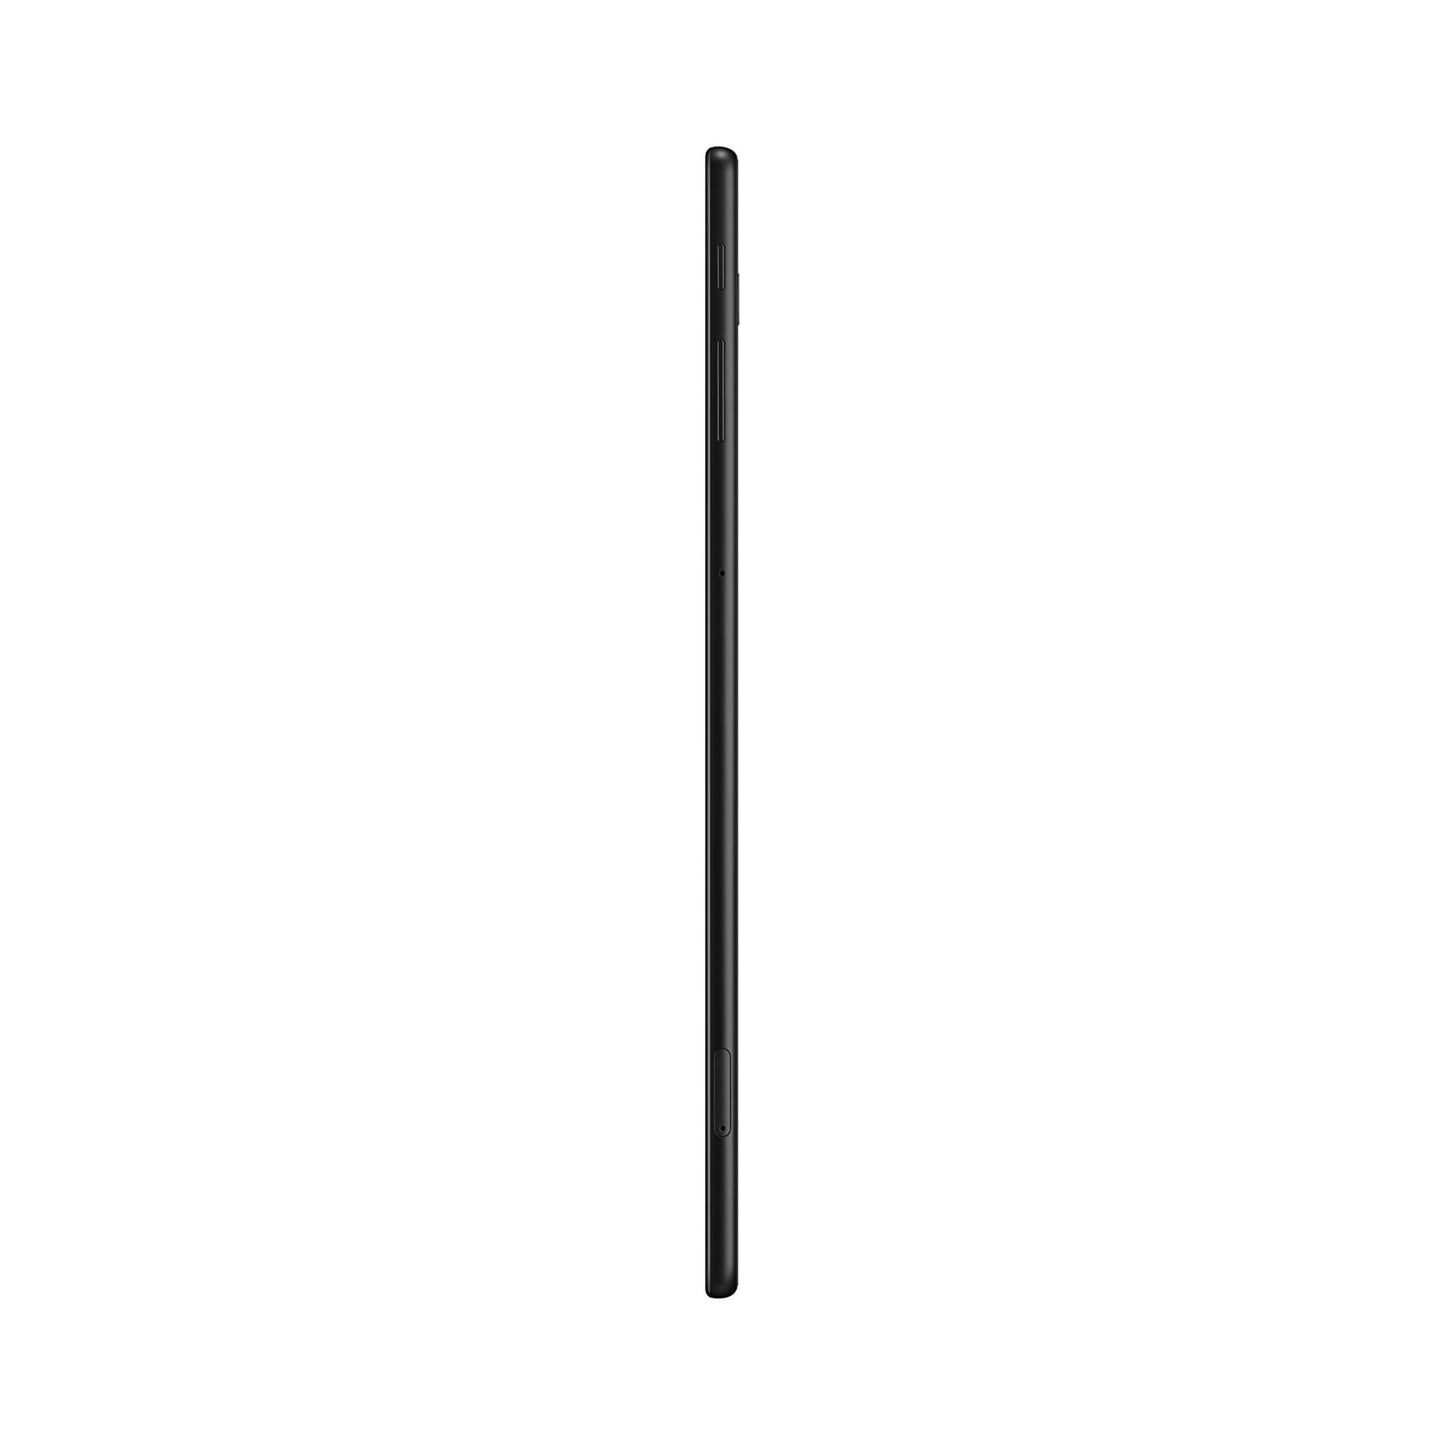 SAMSUNG Galaxy Tab S4 10.5 2018 SM-T835 64GB 4GLTE (Black)